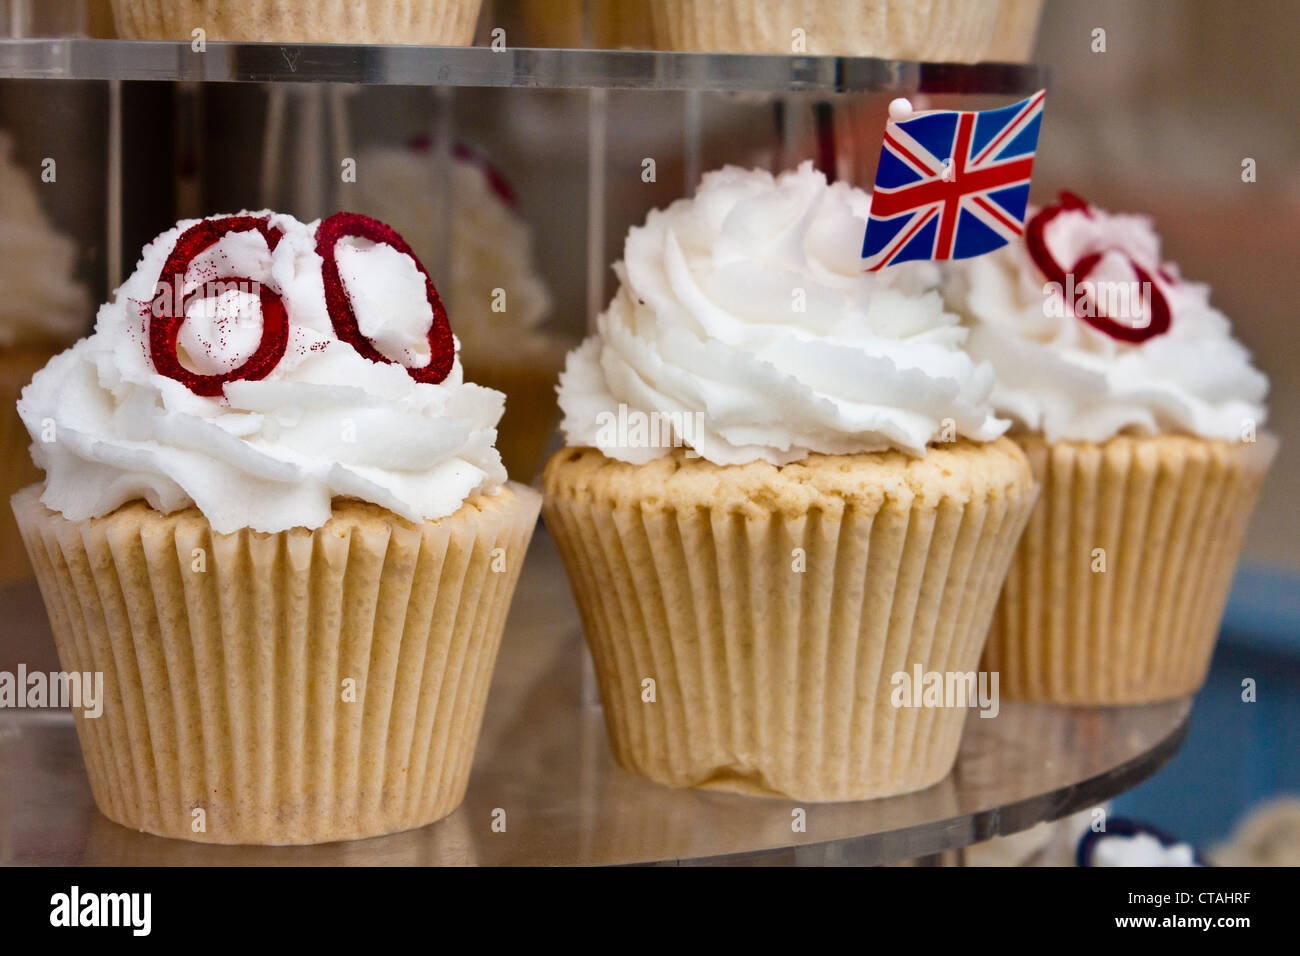 Queen Elizabeth II diamond jubilee celebration fairy cakes or cupcakes in a bakery window. Stock Photo